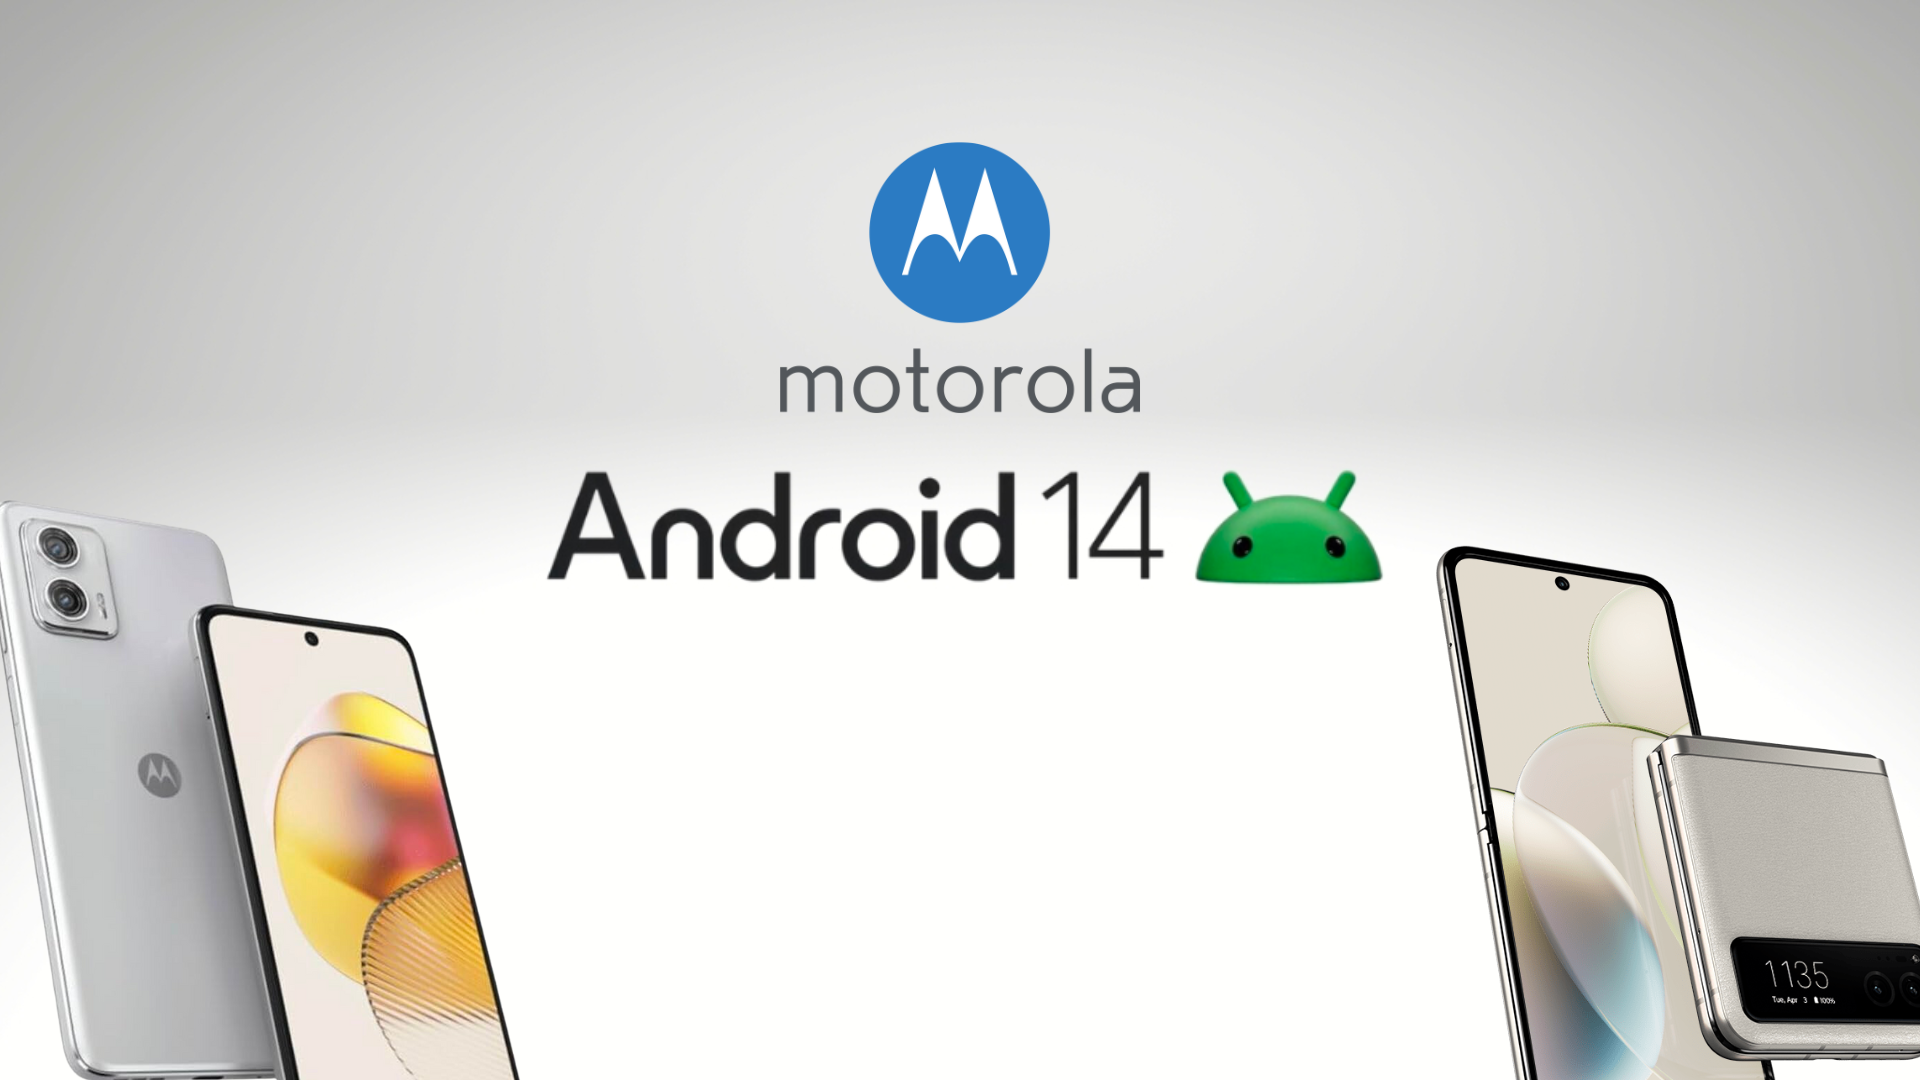 Celulares da Motorola que vão receber o Android 14